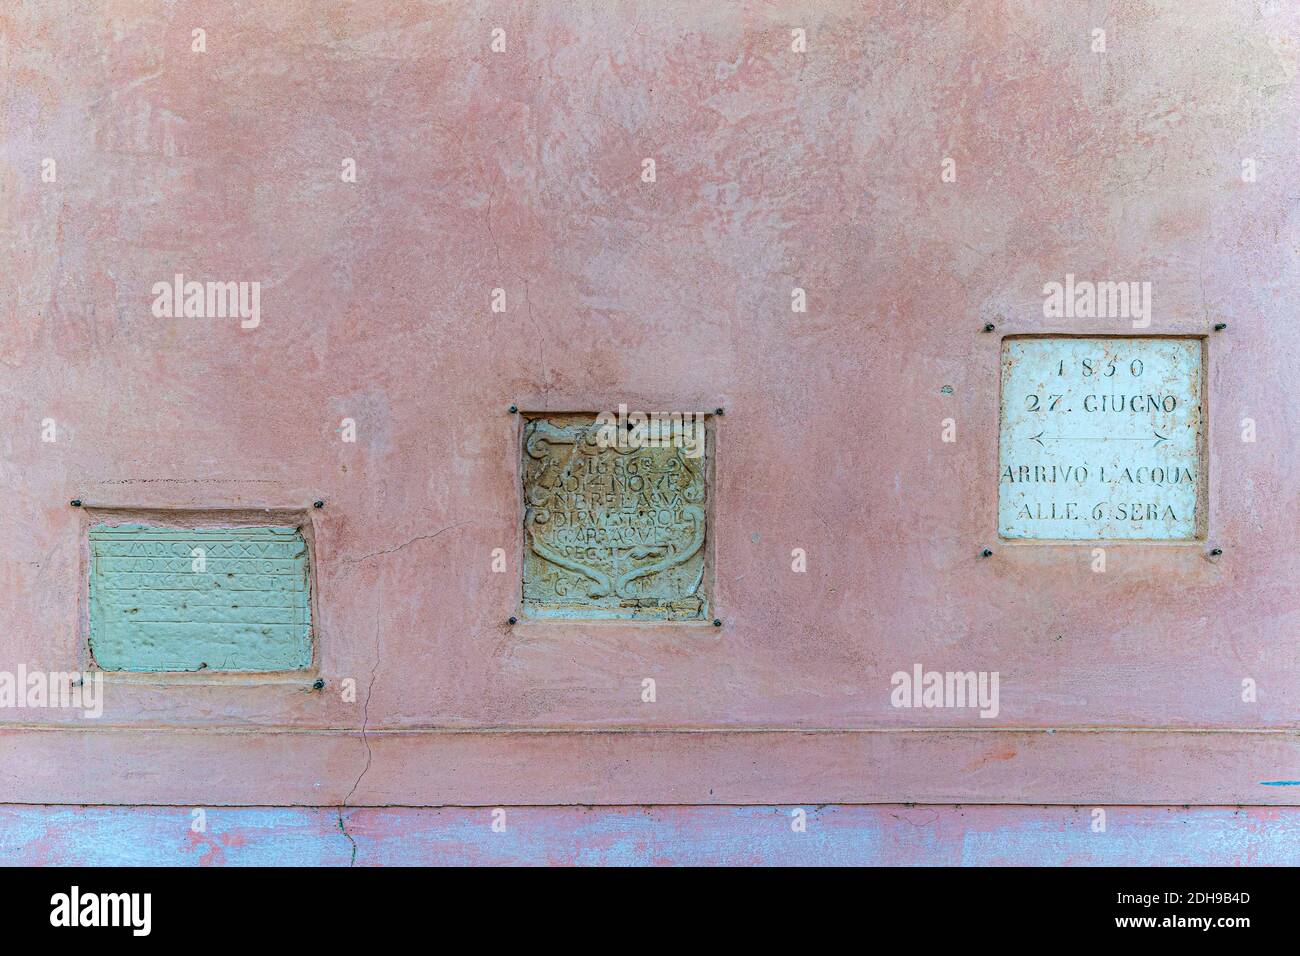 Italy Veneto - Pieve di Soligo - Borgo Stolfi -inscriptions on plates Stock Photo